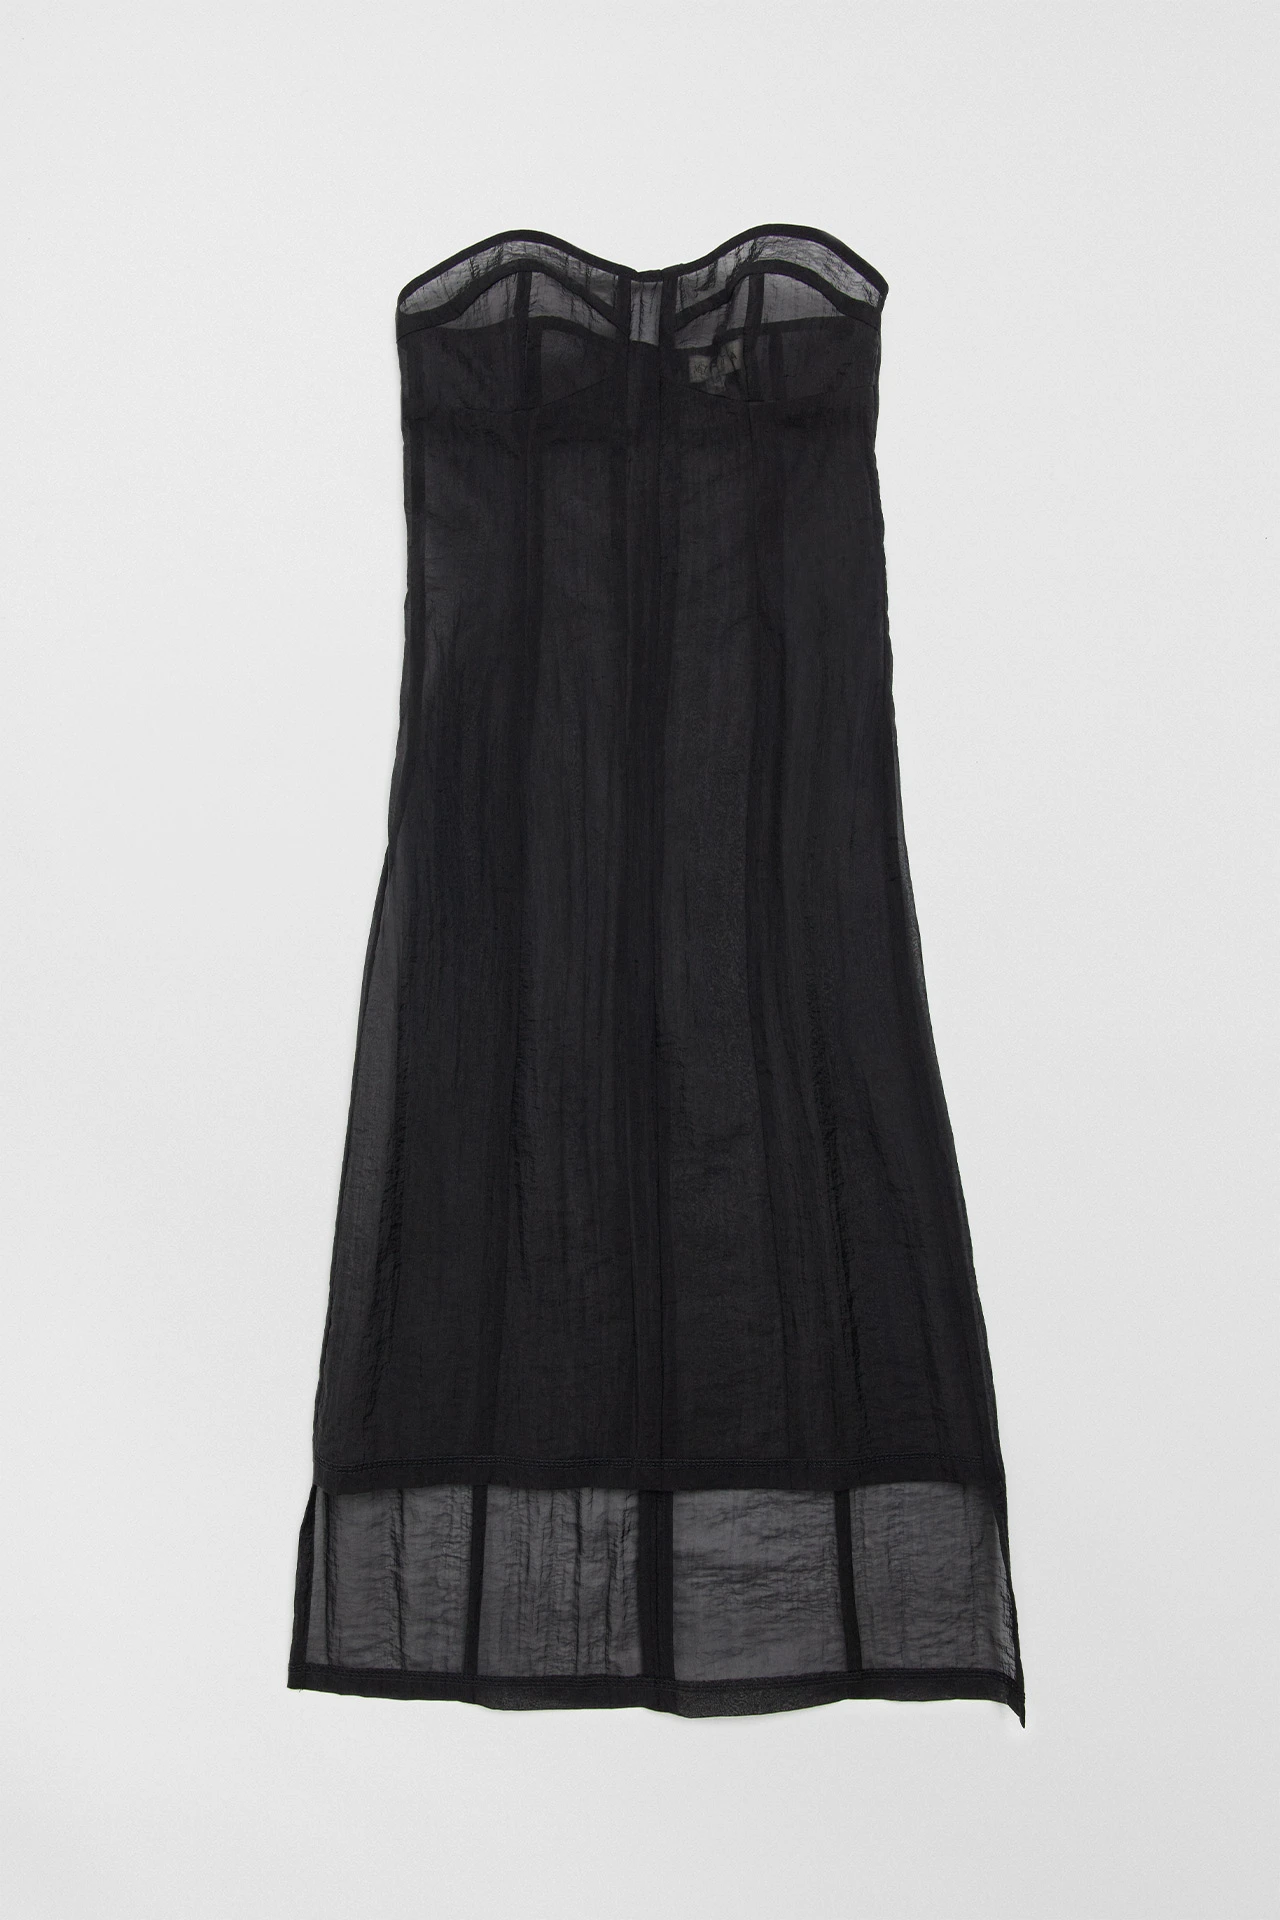 Miista-watson-royal-black-dress-01